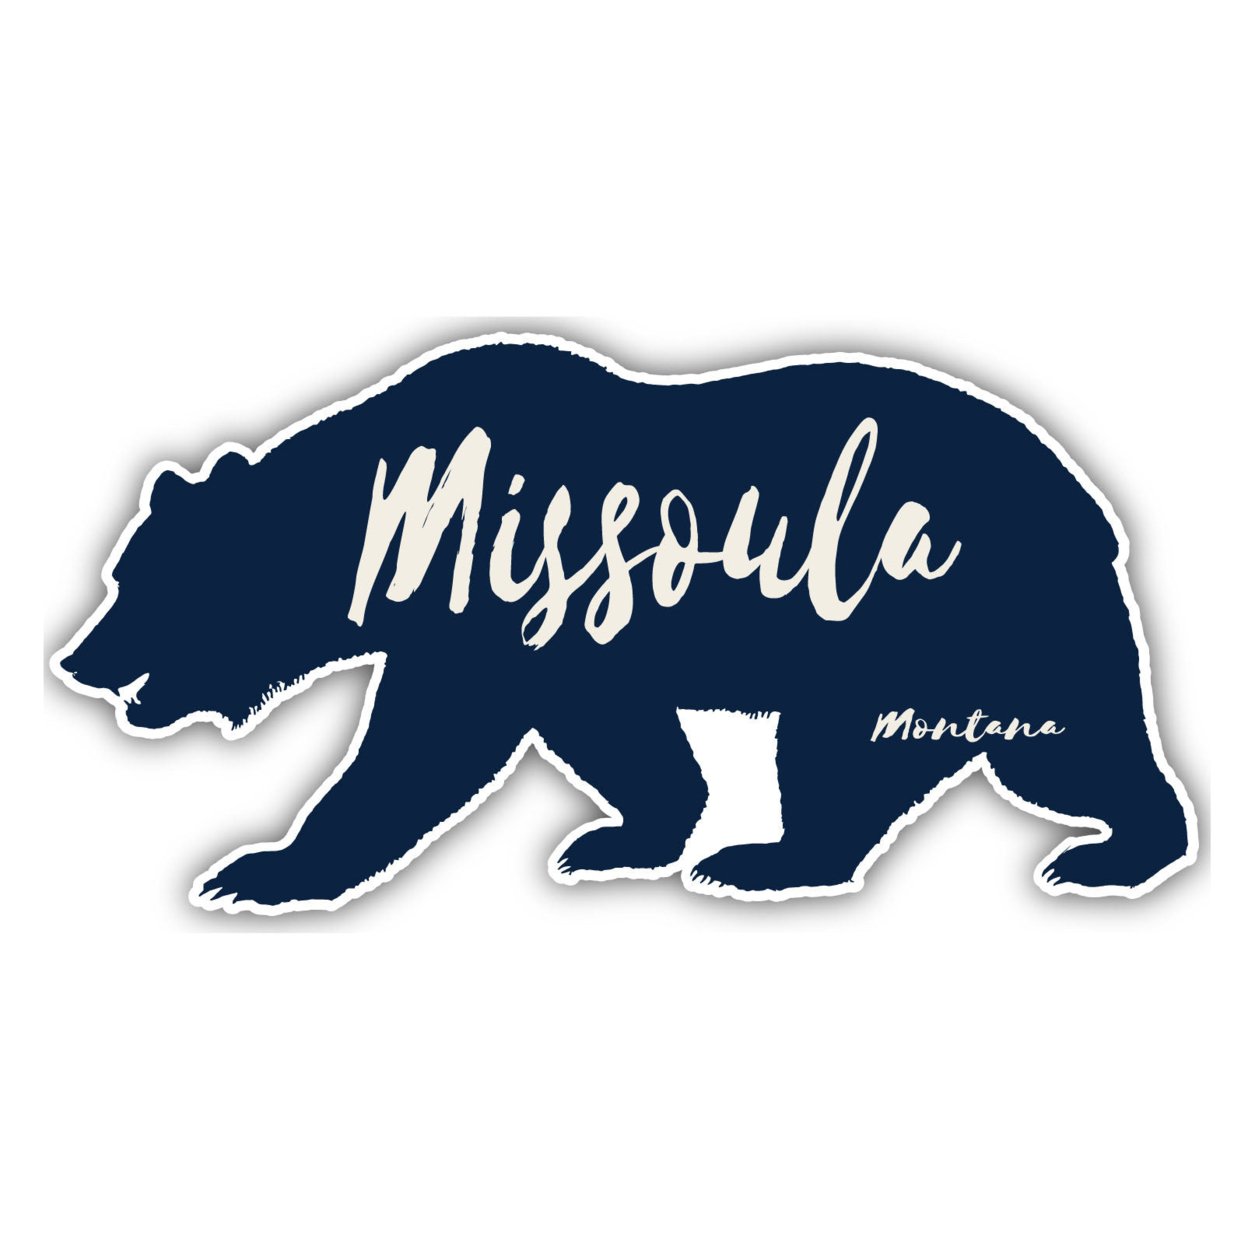 Missoula Montana Souvenir Decorative Stickers (Choose Theme And Size) - 4-Inch, Tent